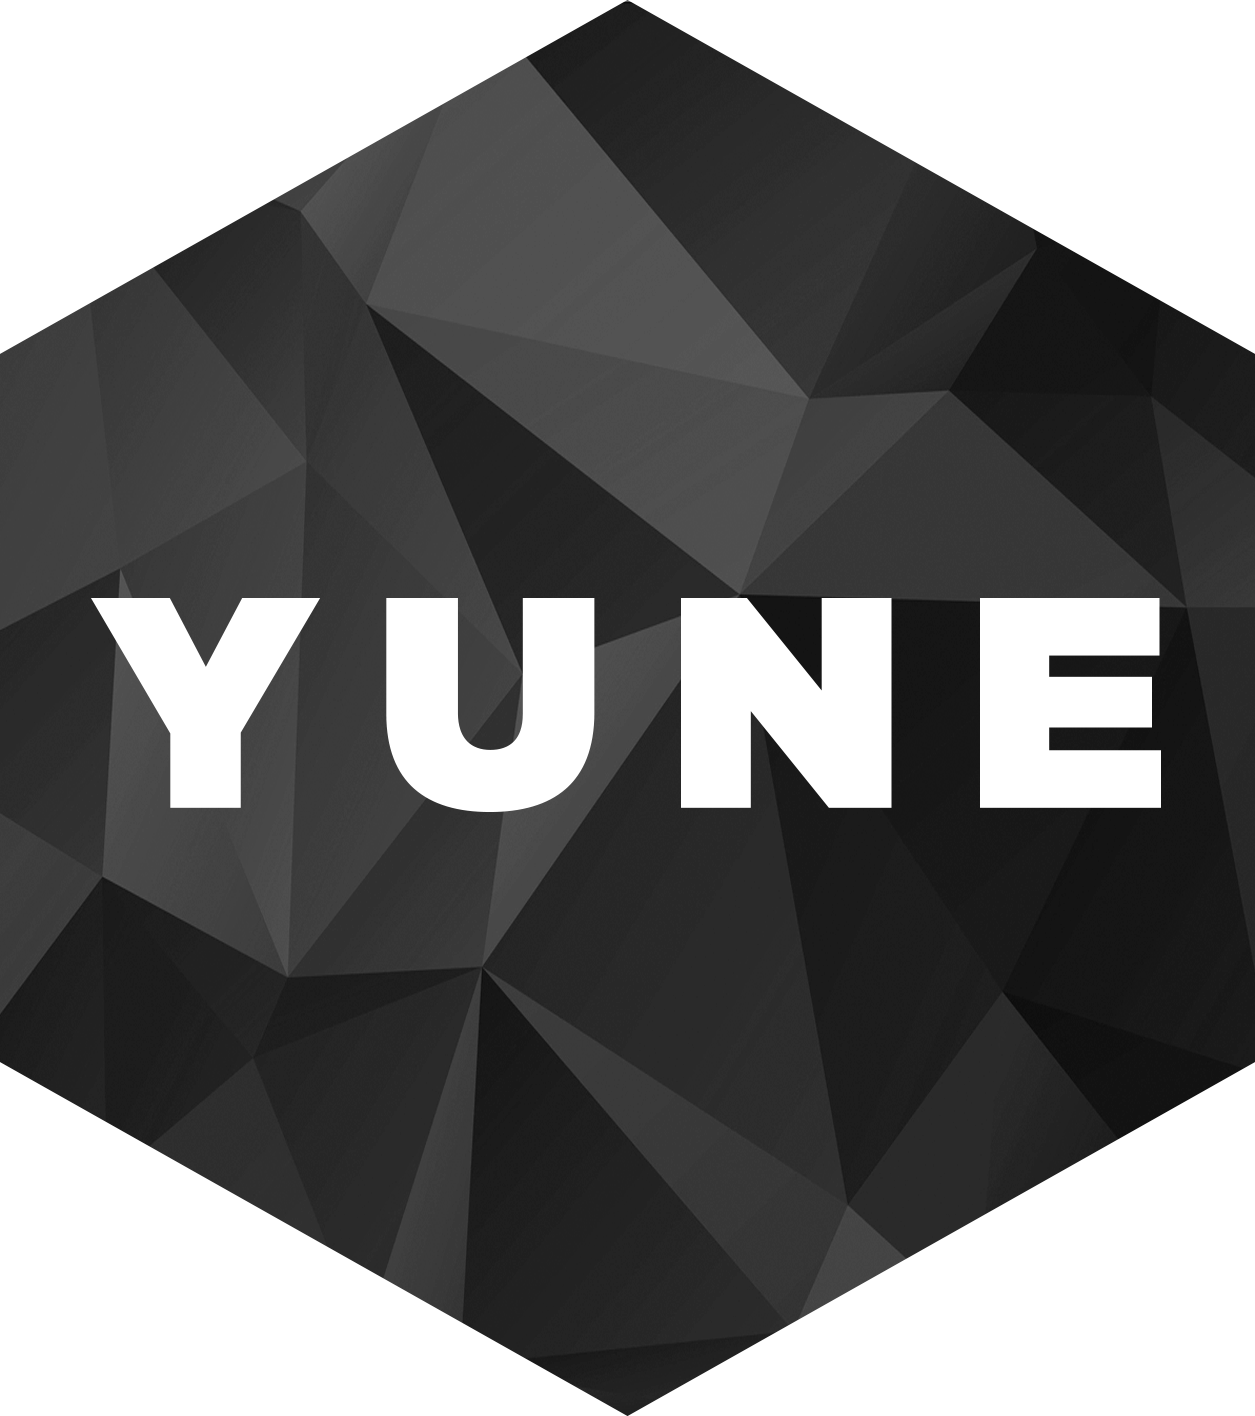 yune content marketing logo